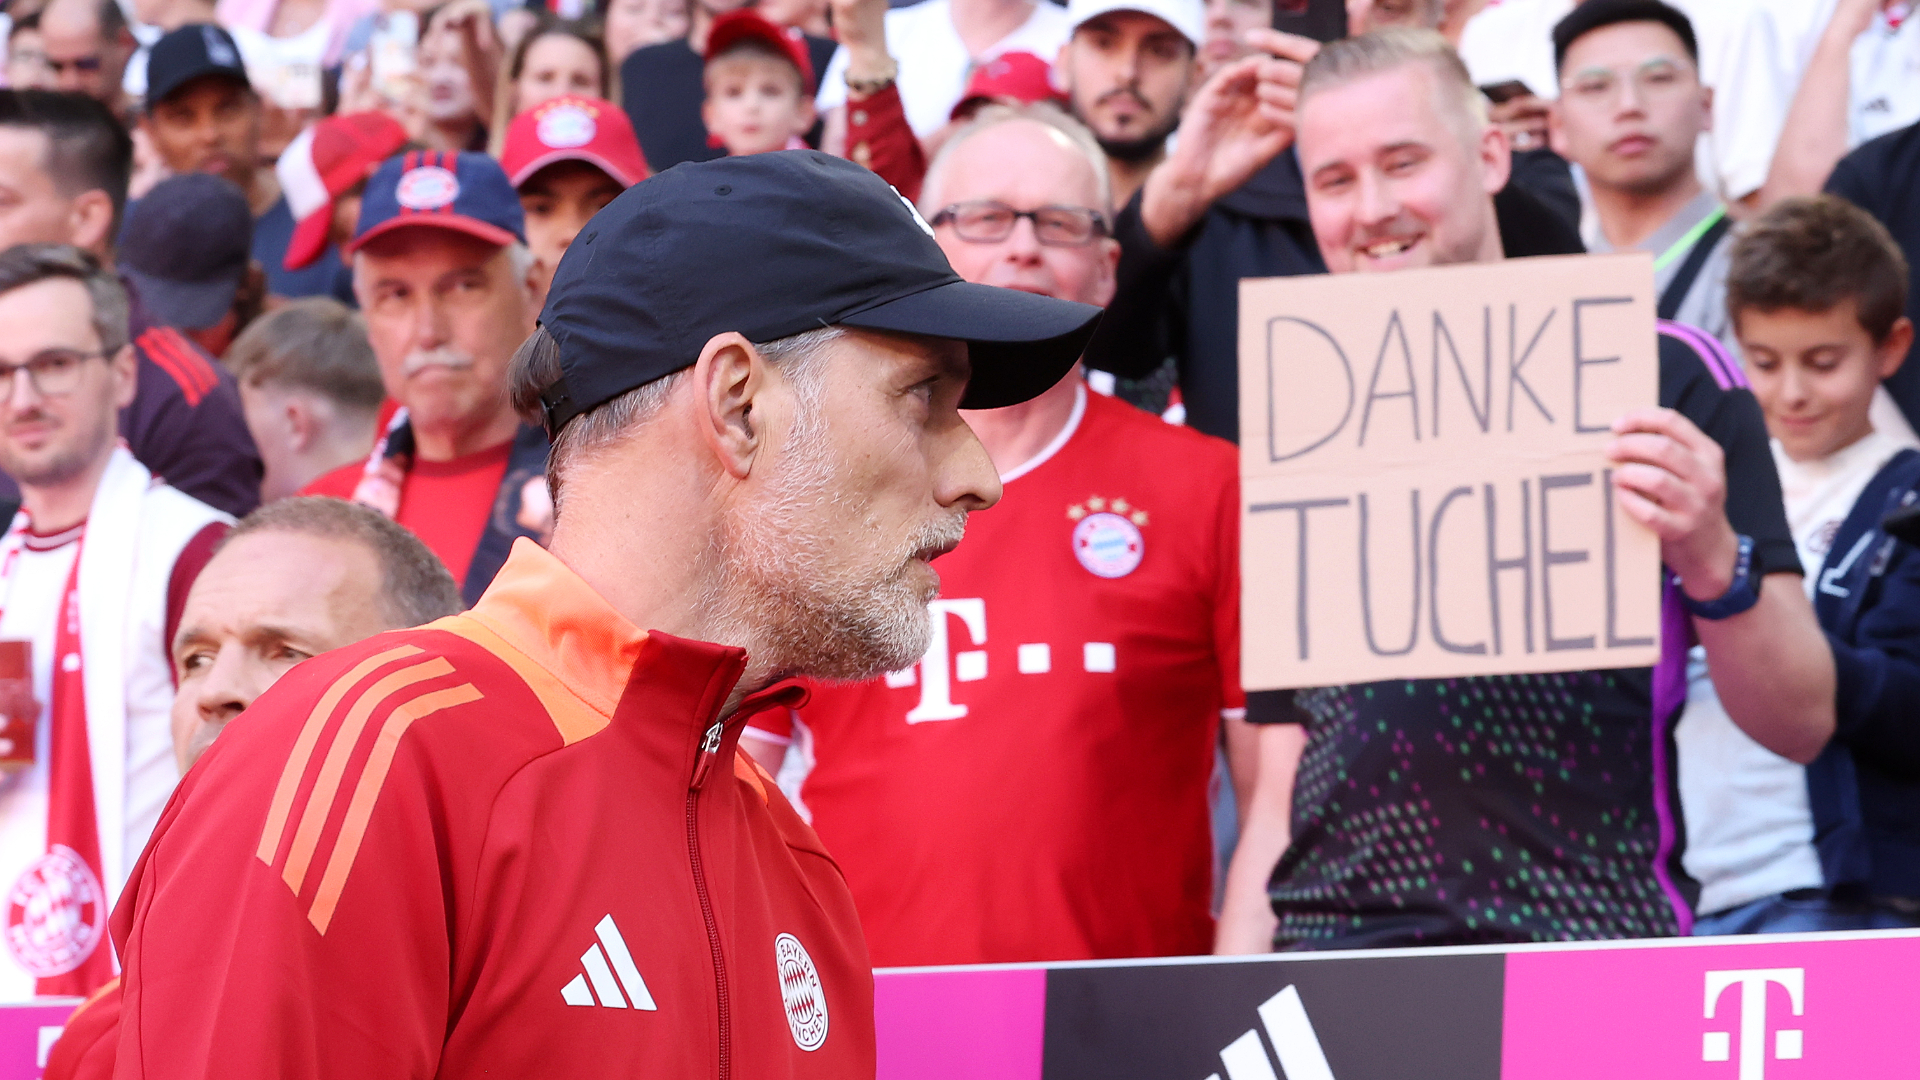 Tuchel skips Bayern farewell